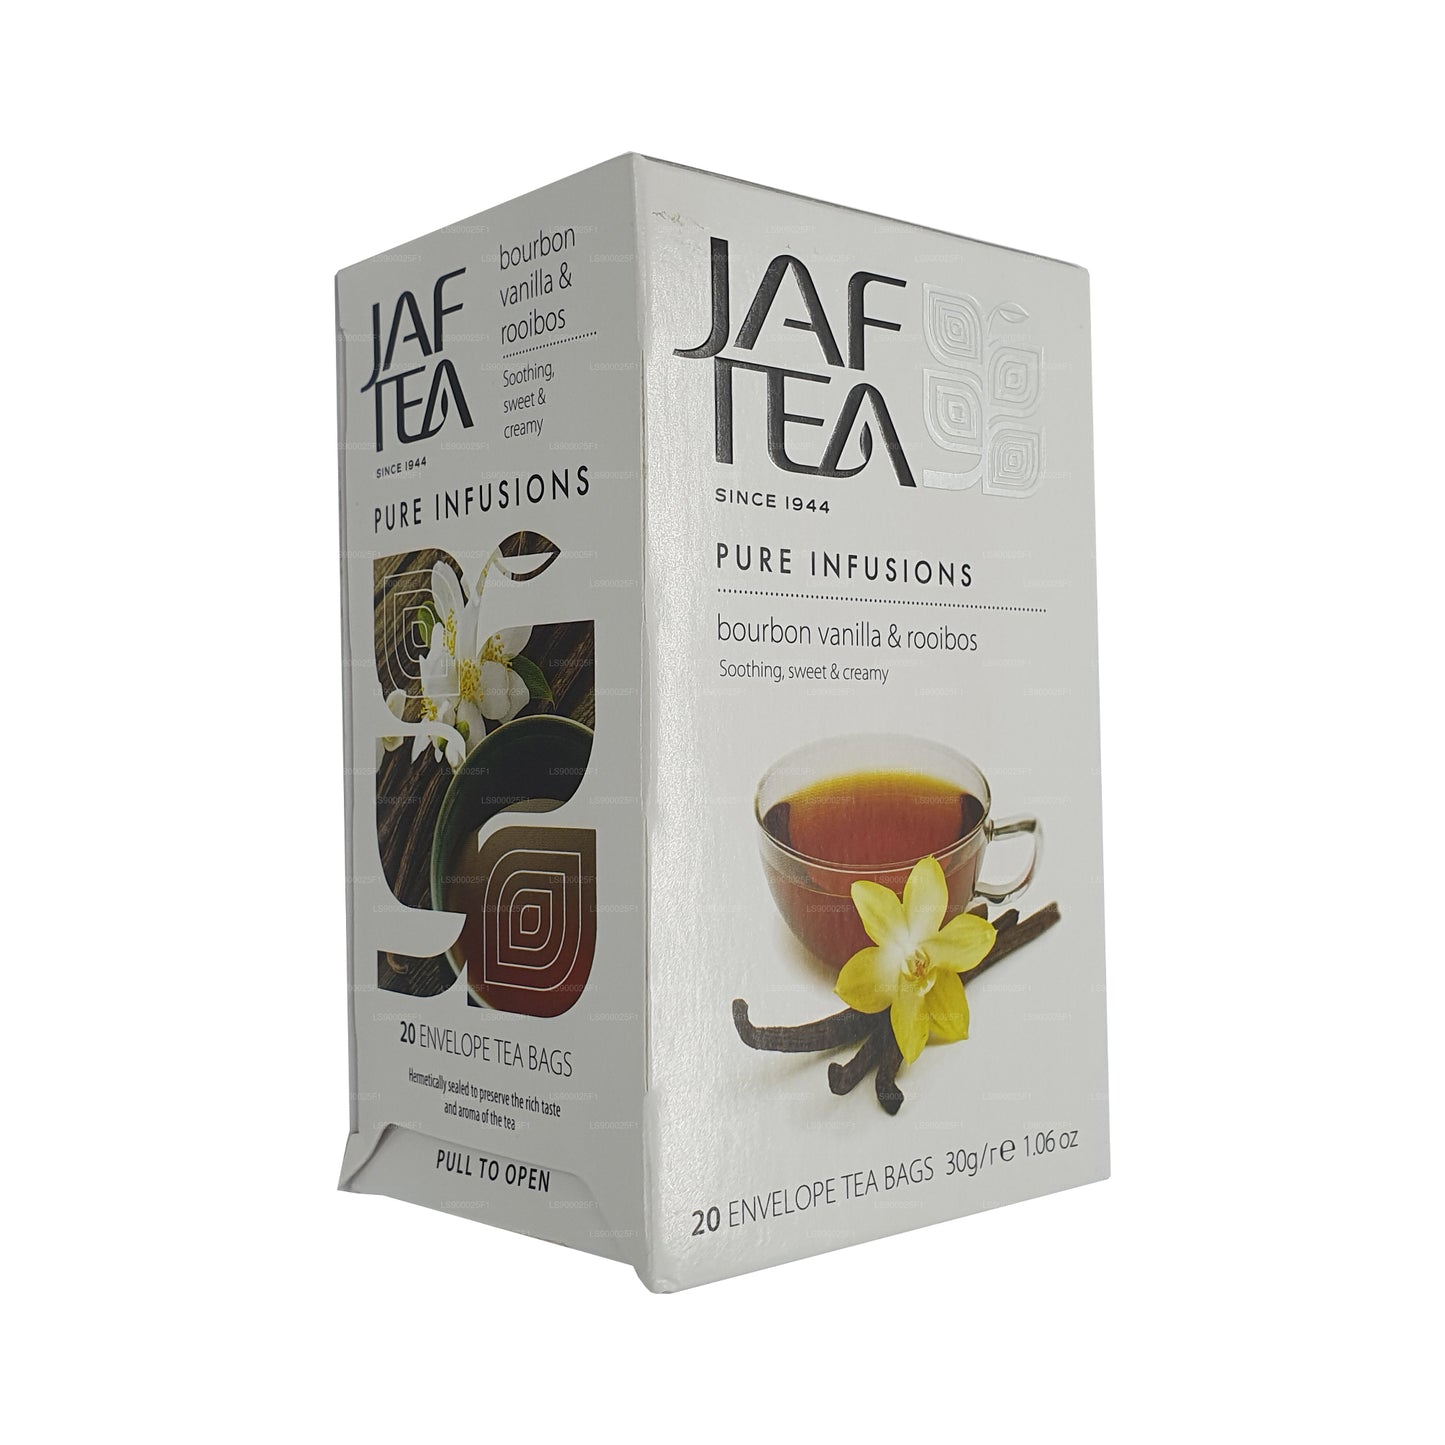 Jaf Tea Pure Infusions Bourbon Vanilla and Rooibos (30g) 20 Envelope Tea Bags